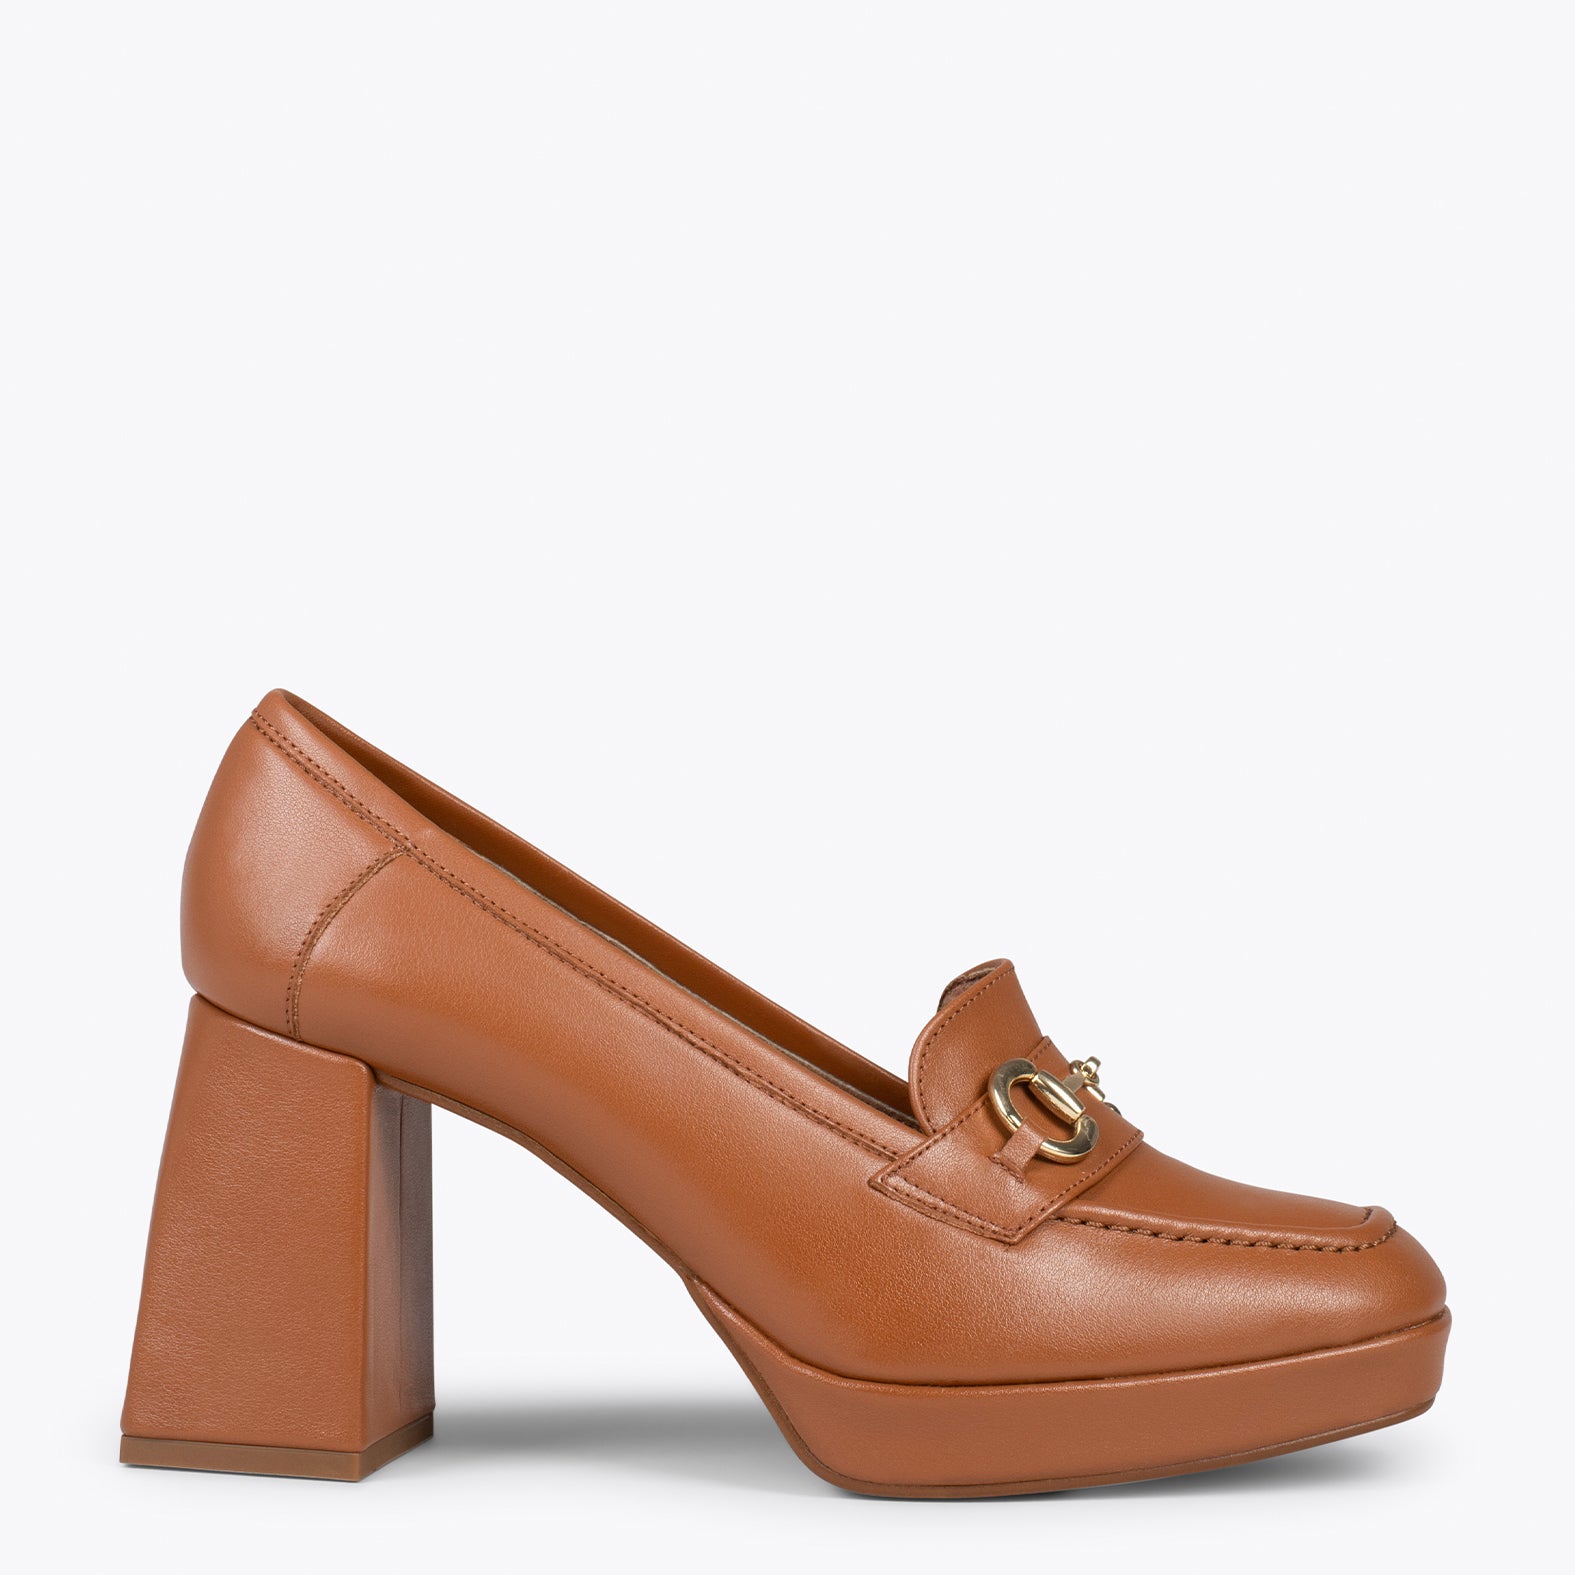 ANNETTE – CAMEL moccasins with block heel and platform